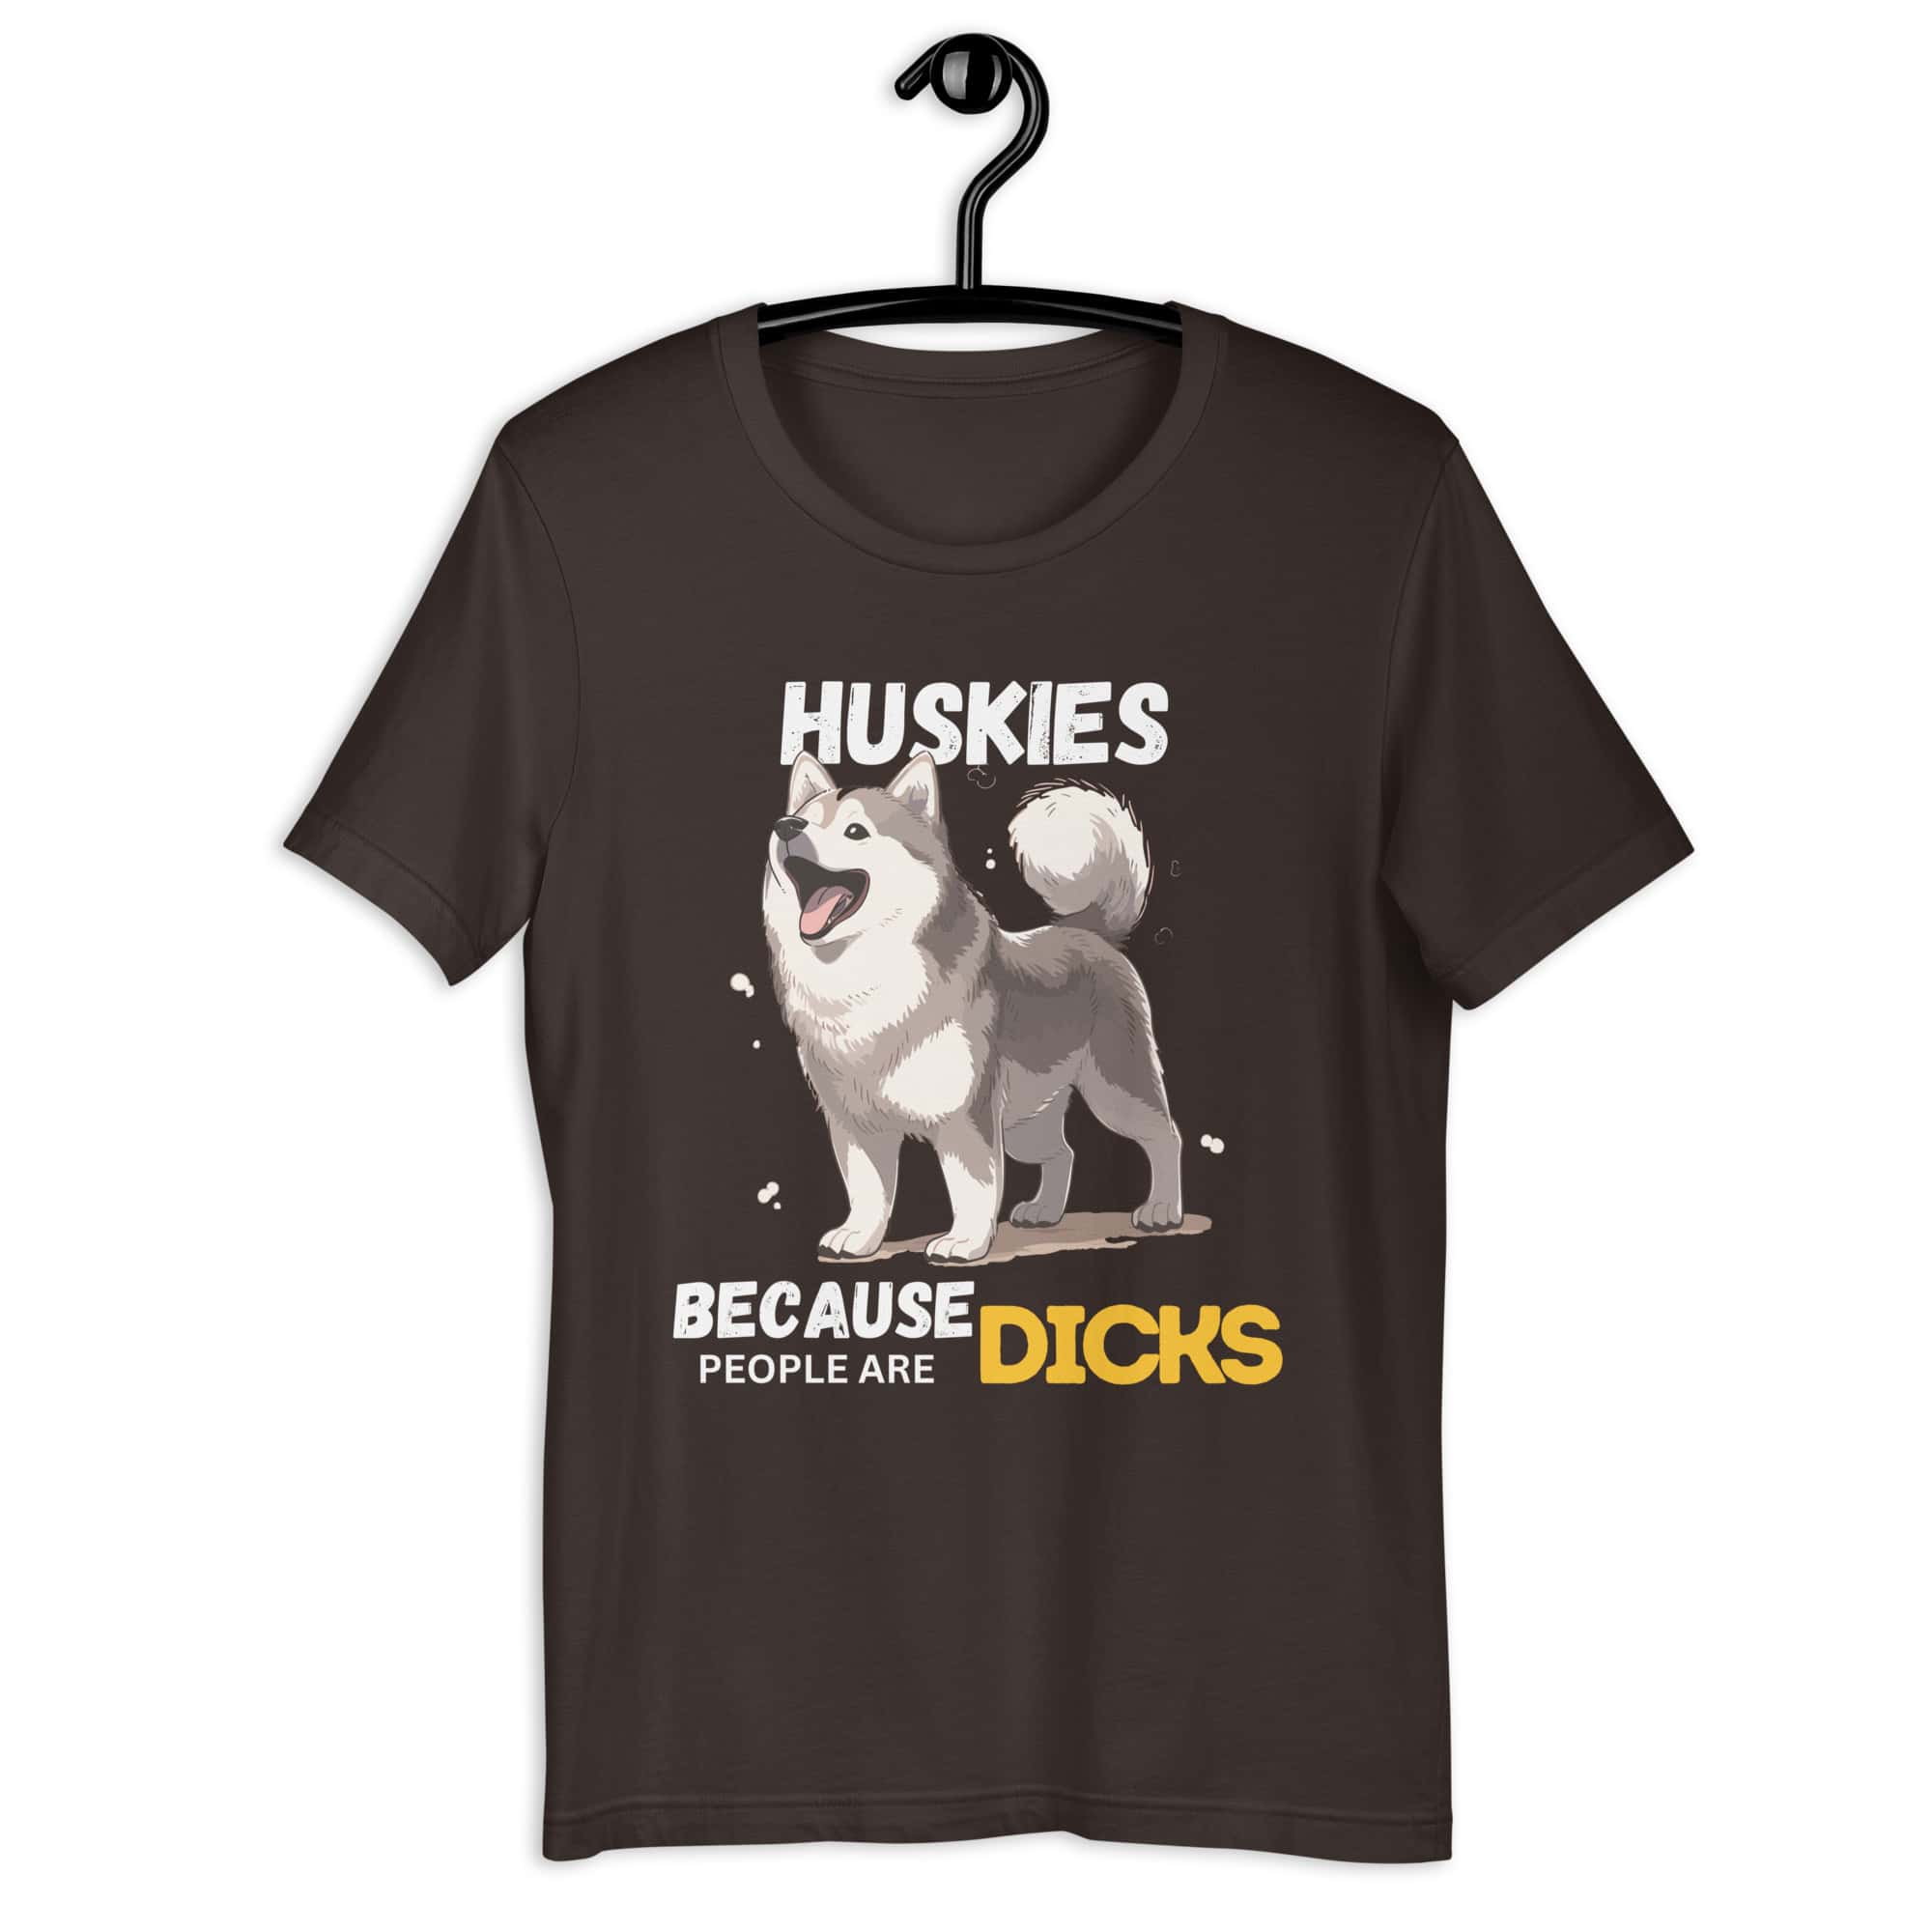 Huskies Because People Are Dicks Unisex T-Shirt brown